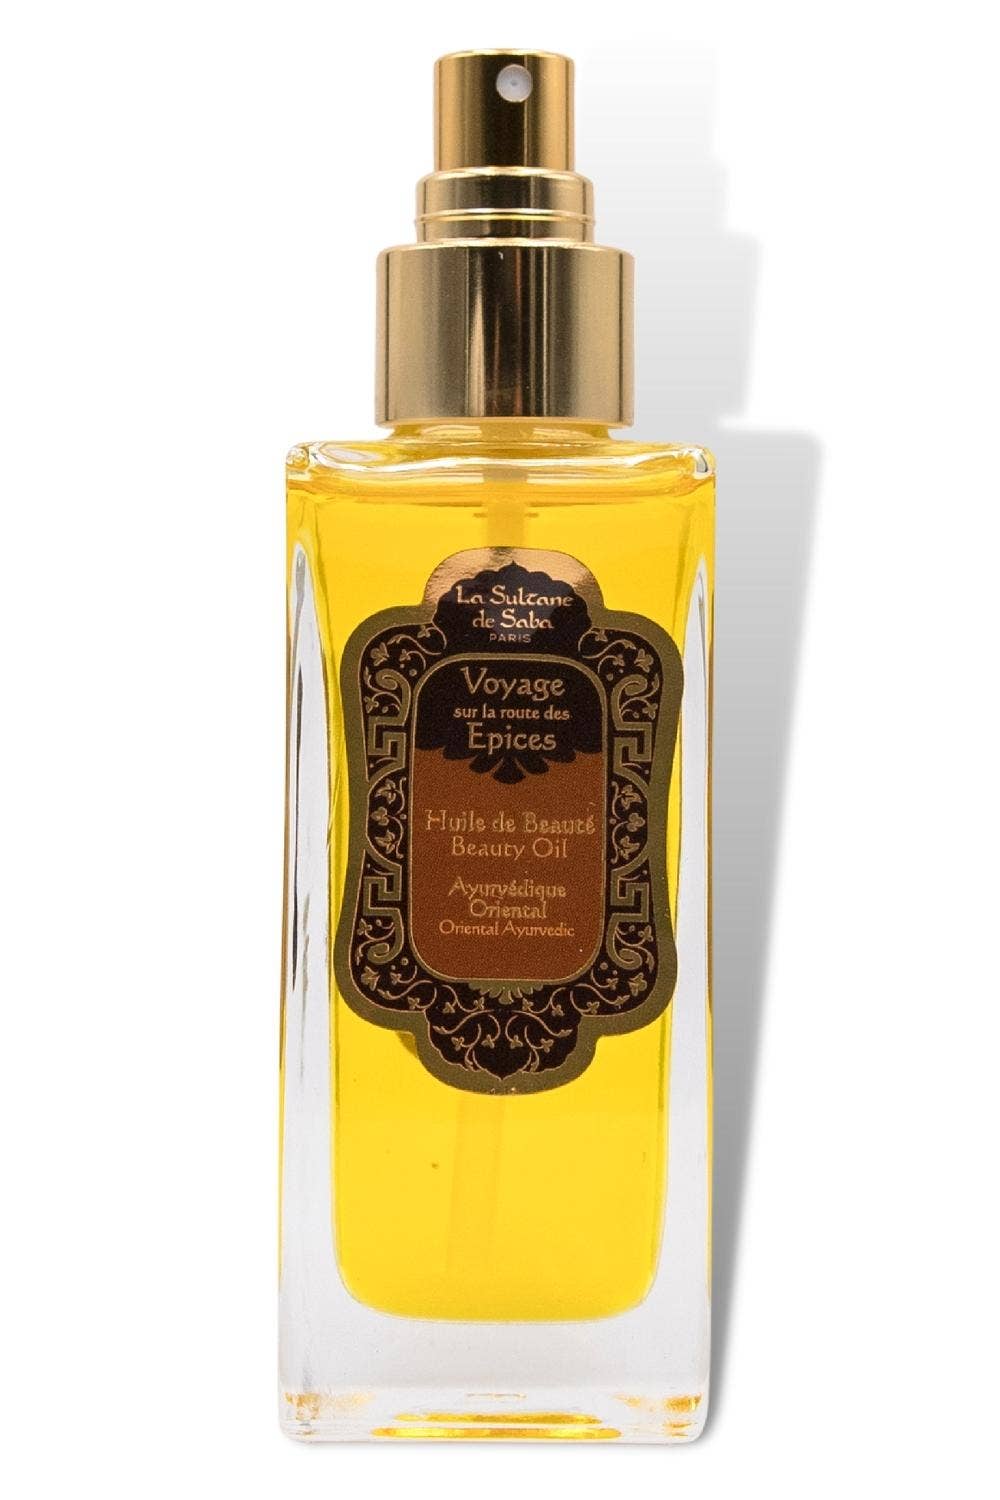 Body lotion - Lotus and frangipani - the Sultane de Saba